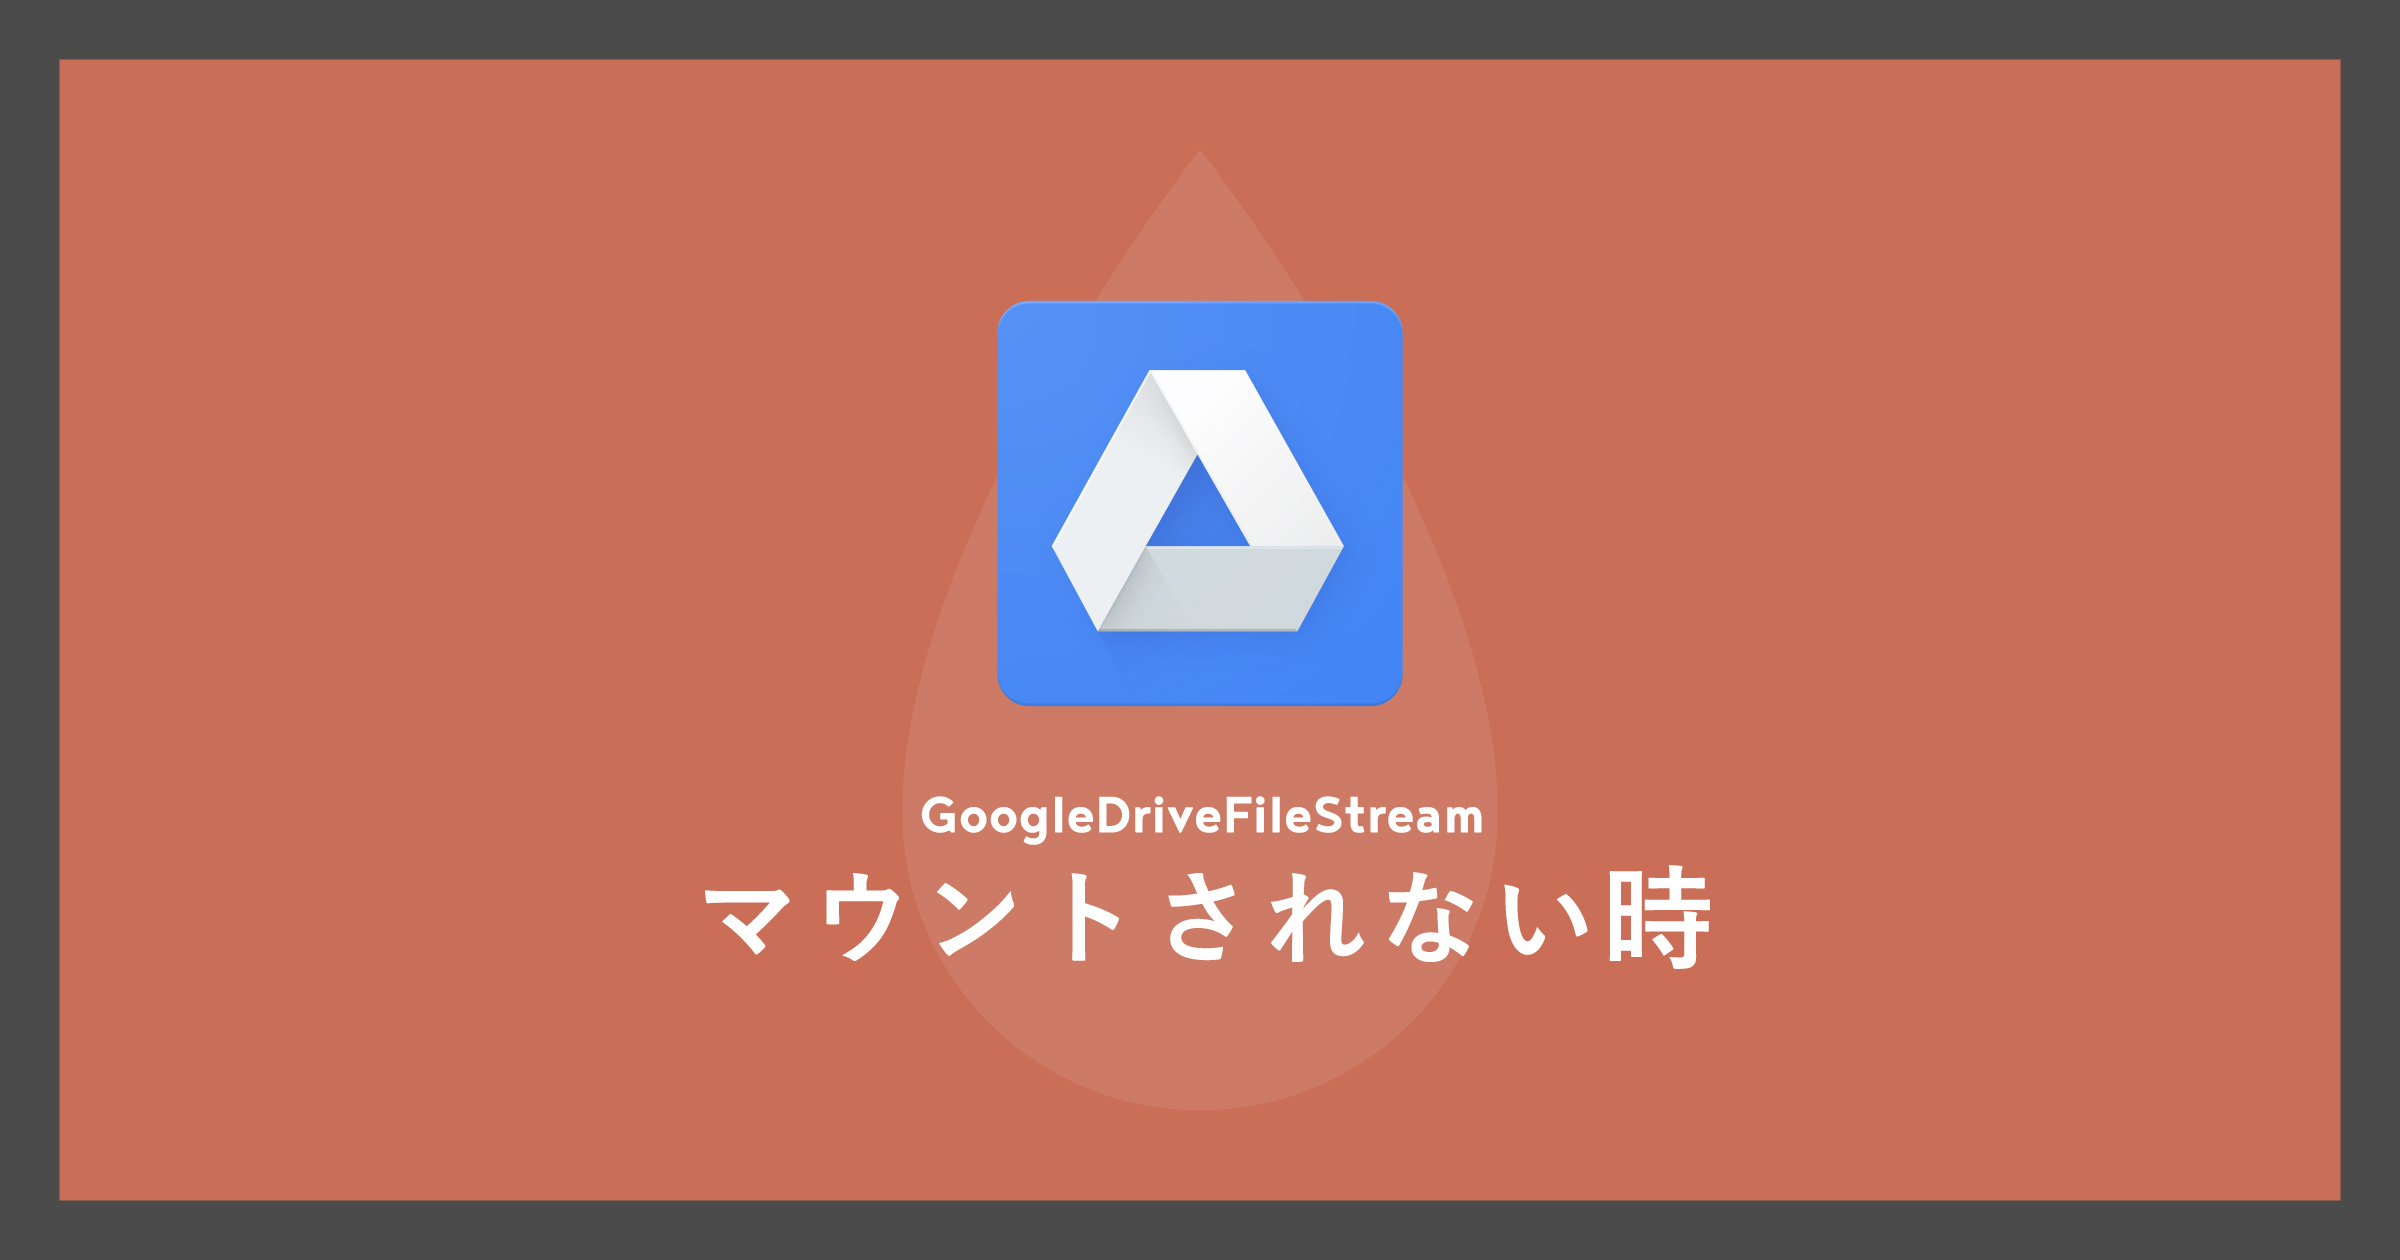 「[Mac]GoogleDriveFileStreamがマウントされない時」のアイキャッチ画像